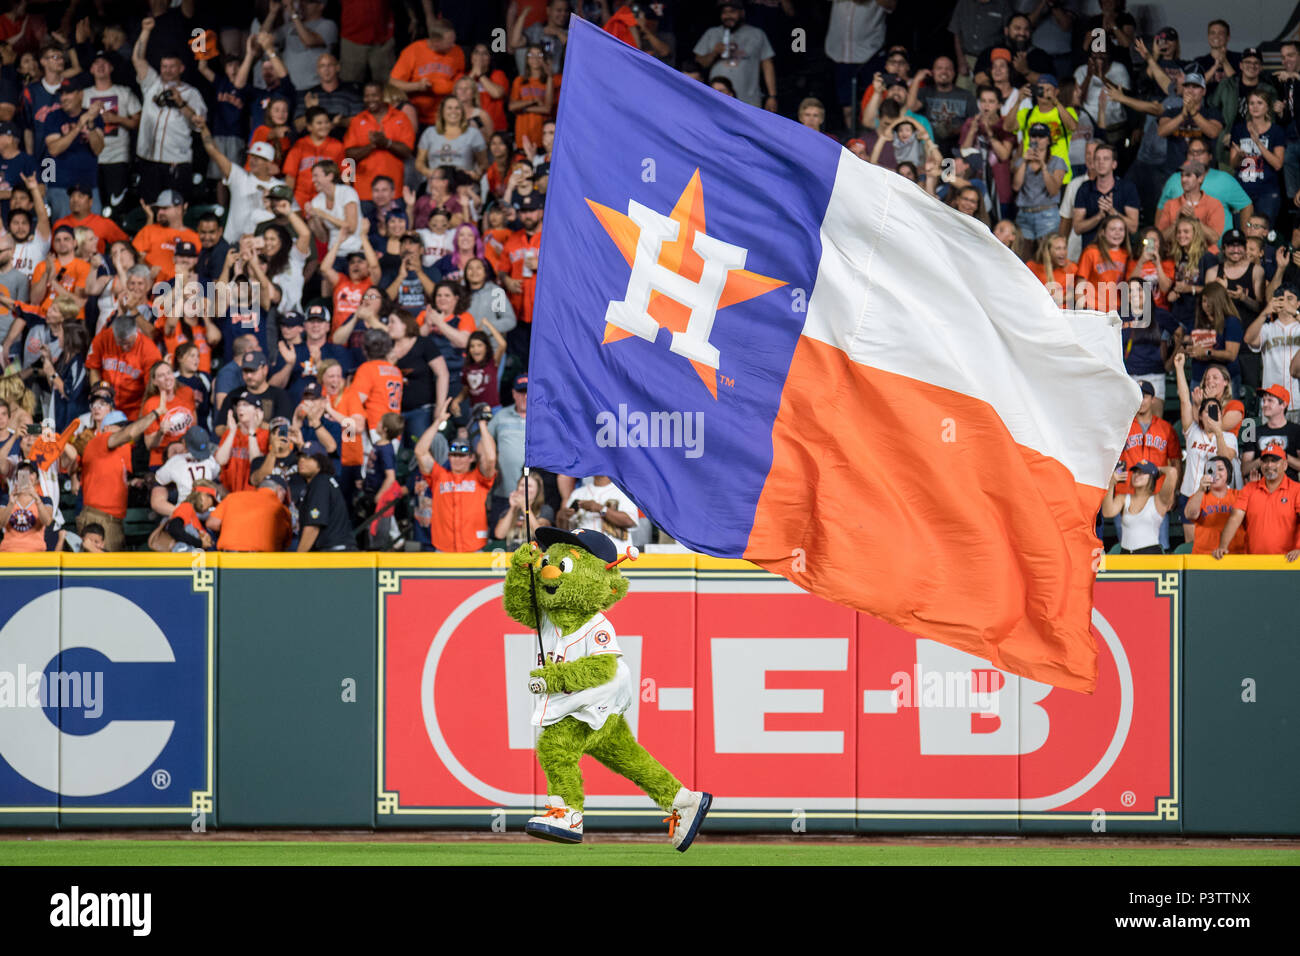 Houston Astros Mascot – Sports Images & More LLC